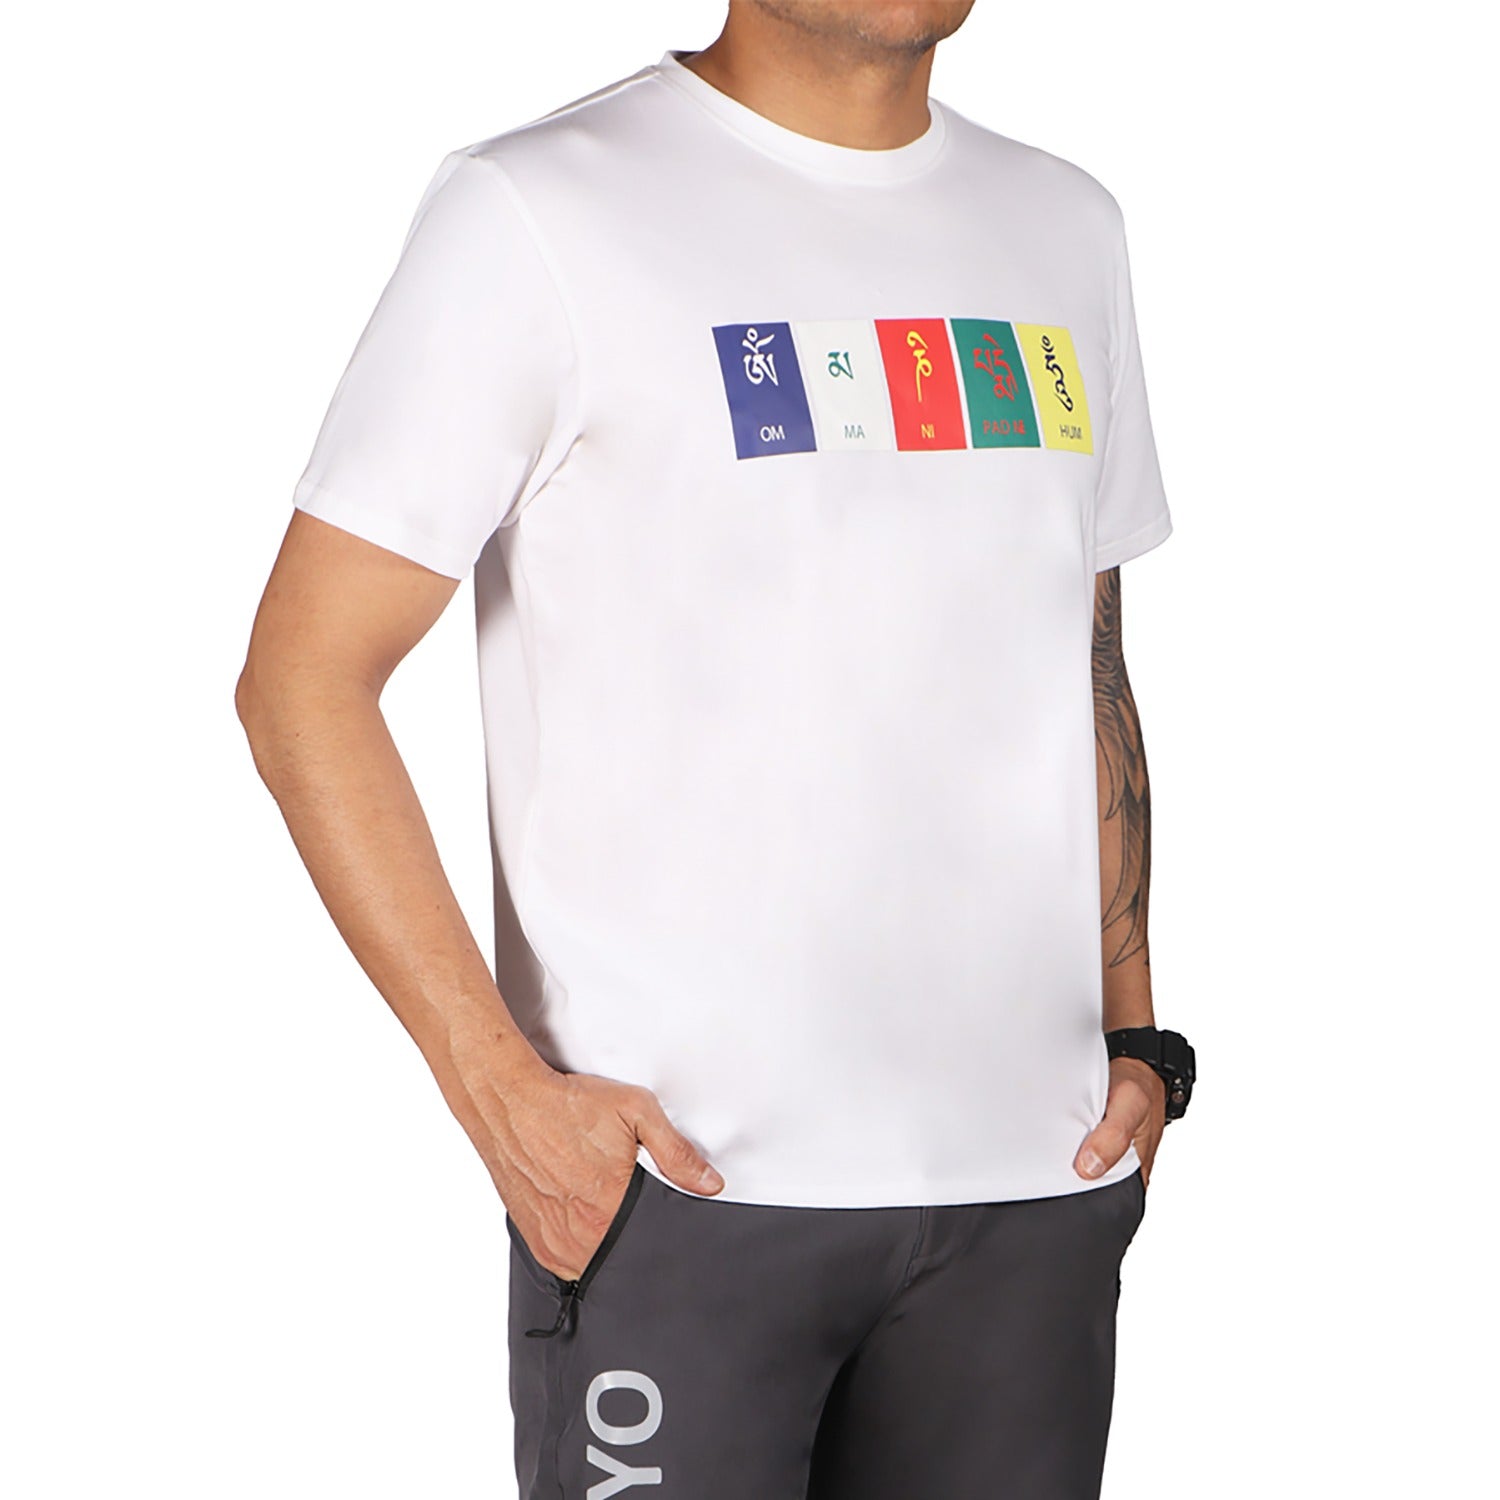 Buy Gokyo GOKYO Originals Tshirt - Om Mani Padme Hum | Trekking & Hiking T-shirts at Gokyo Outdoor Clothing & Gear